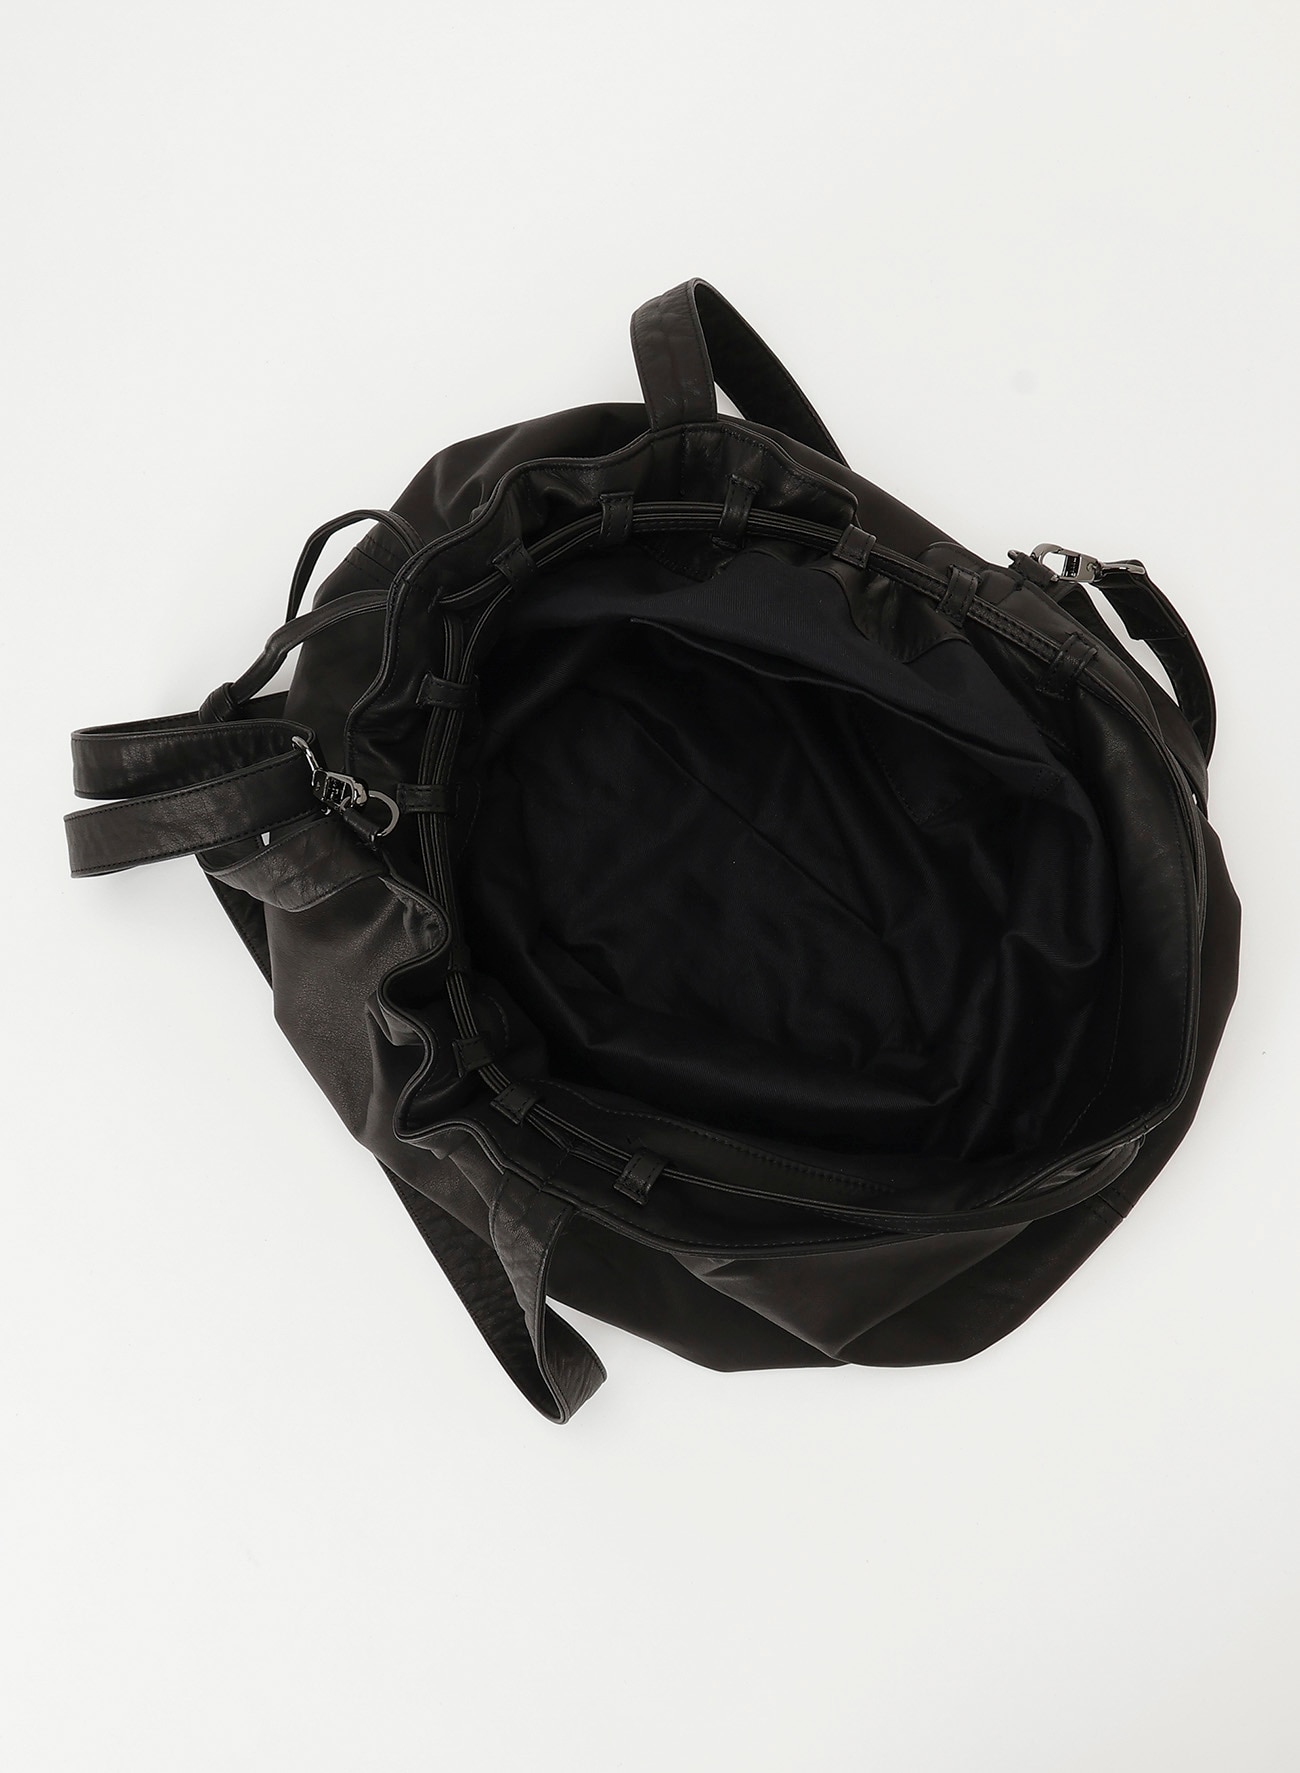 Coquillage tote(FREE SIZE Black): discord Yohji Yamamoto｜THE SHOP 